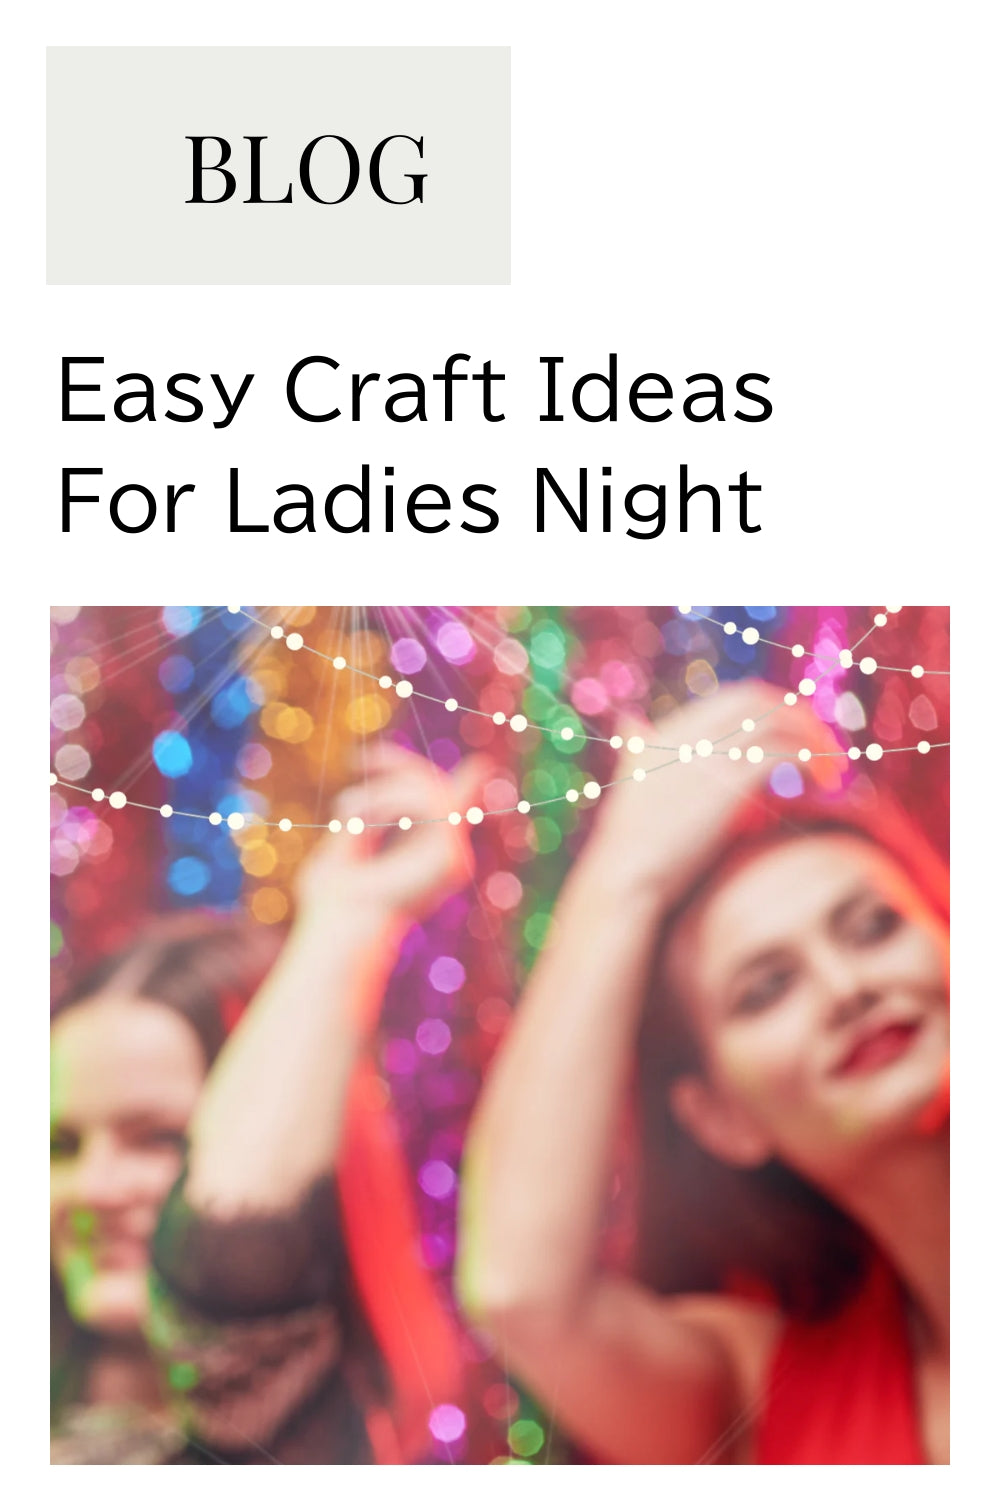 Easy Craft Ideas for Ladies Night